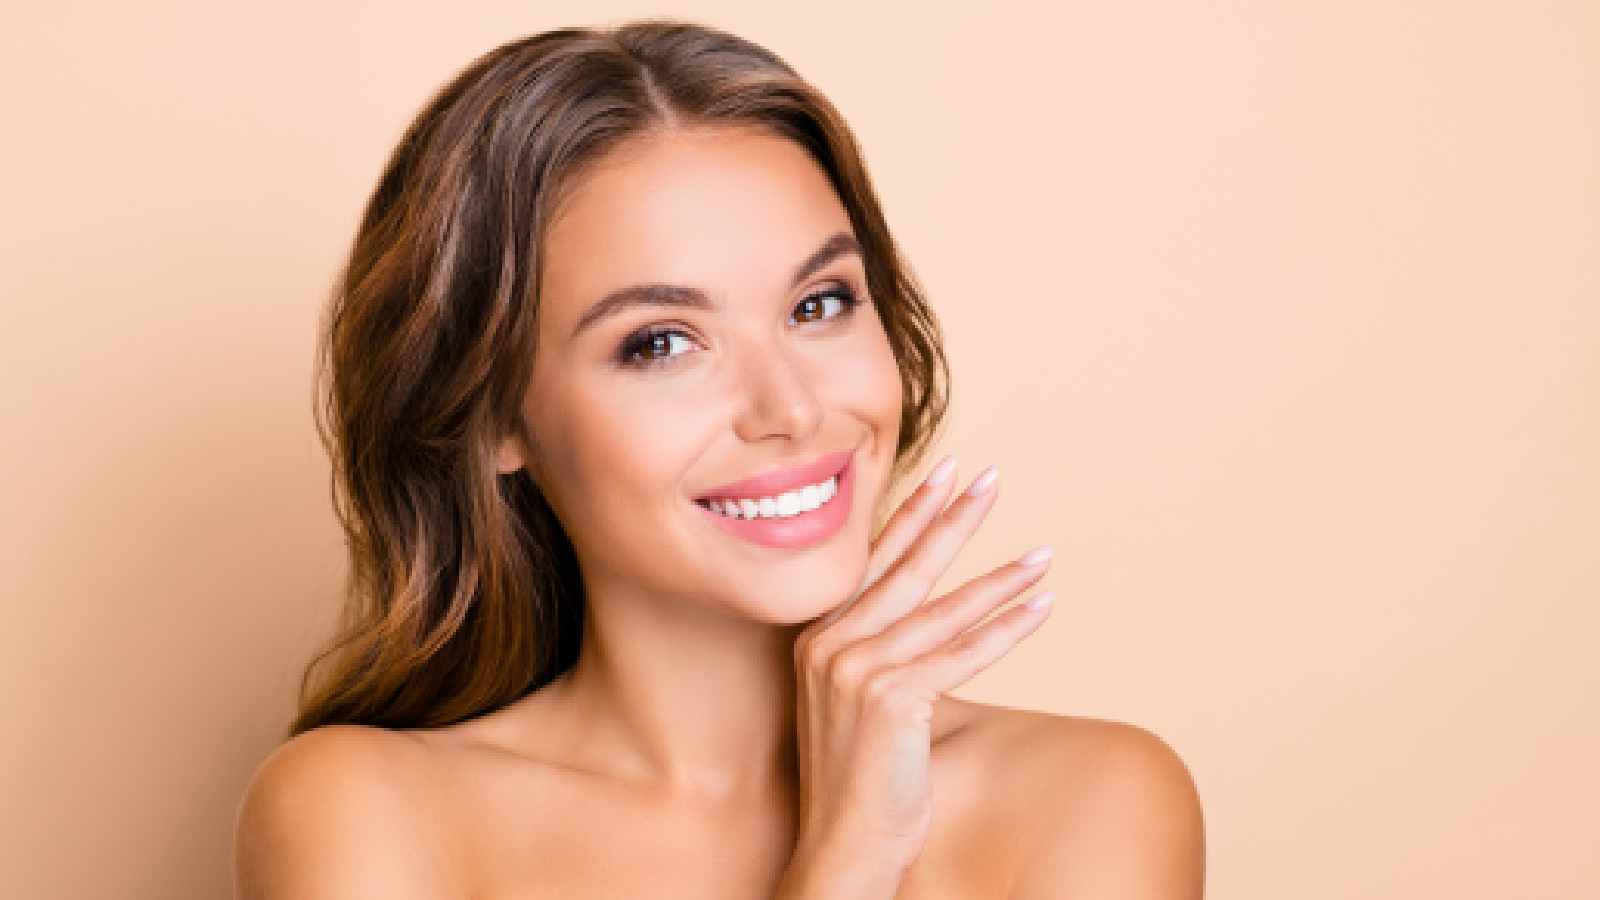 Get rid of facial hair naturally: 5 home remedies